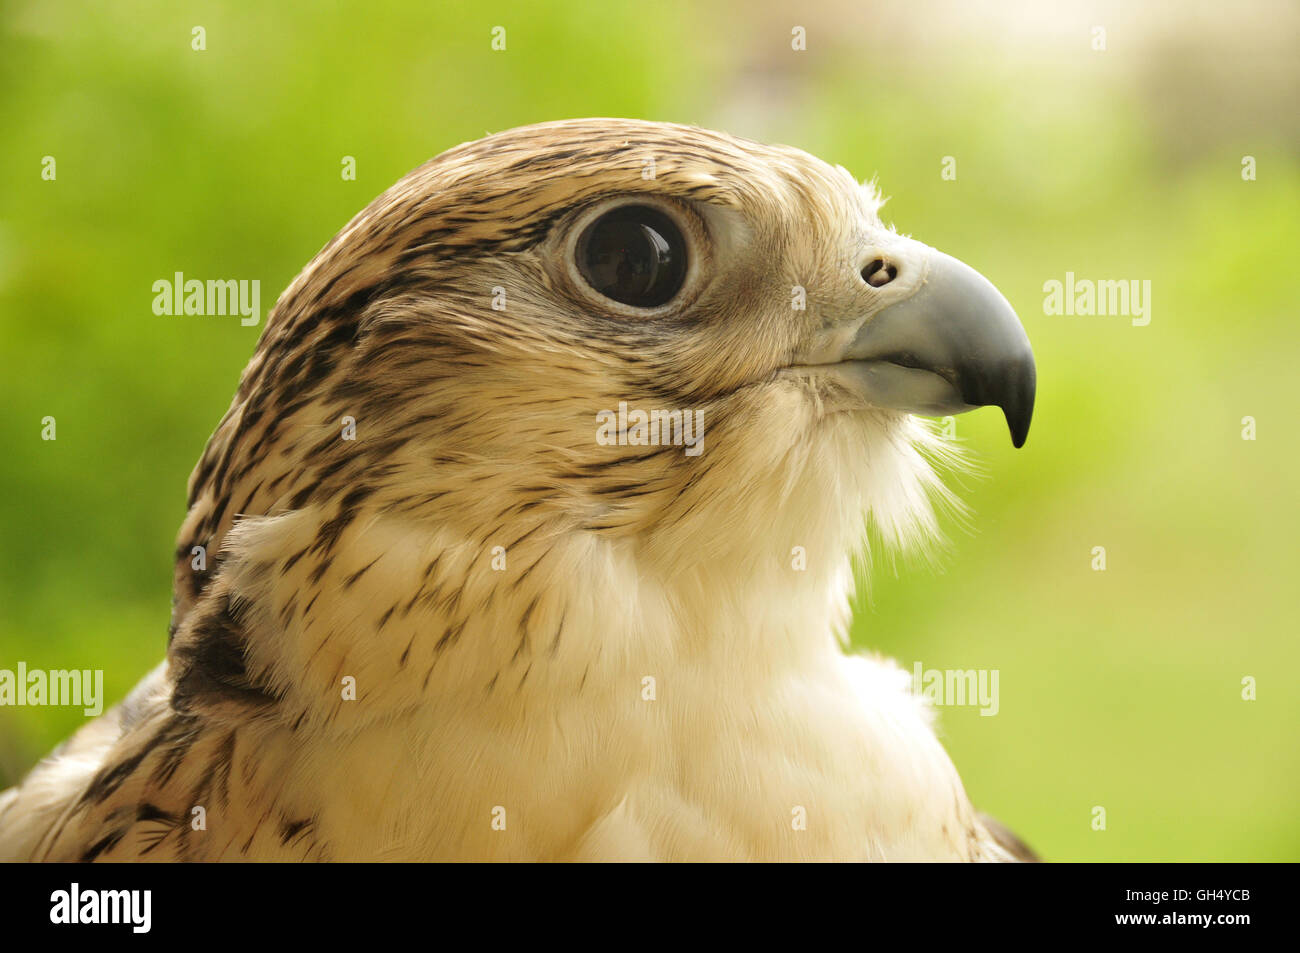 Zoologie / animaux, Oiseaux (Aves), falcon (Falco) dans l'hôpital, Falcon Abu Dhabi Abu Dhabi, Émirats arabes unis, France, Moyen Orient, Moyen-Orient,-Additional-Rights Clearance-Info-Not-Available Banque D'Images